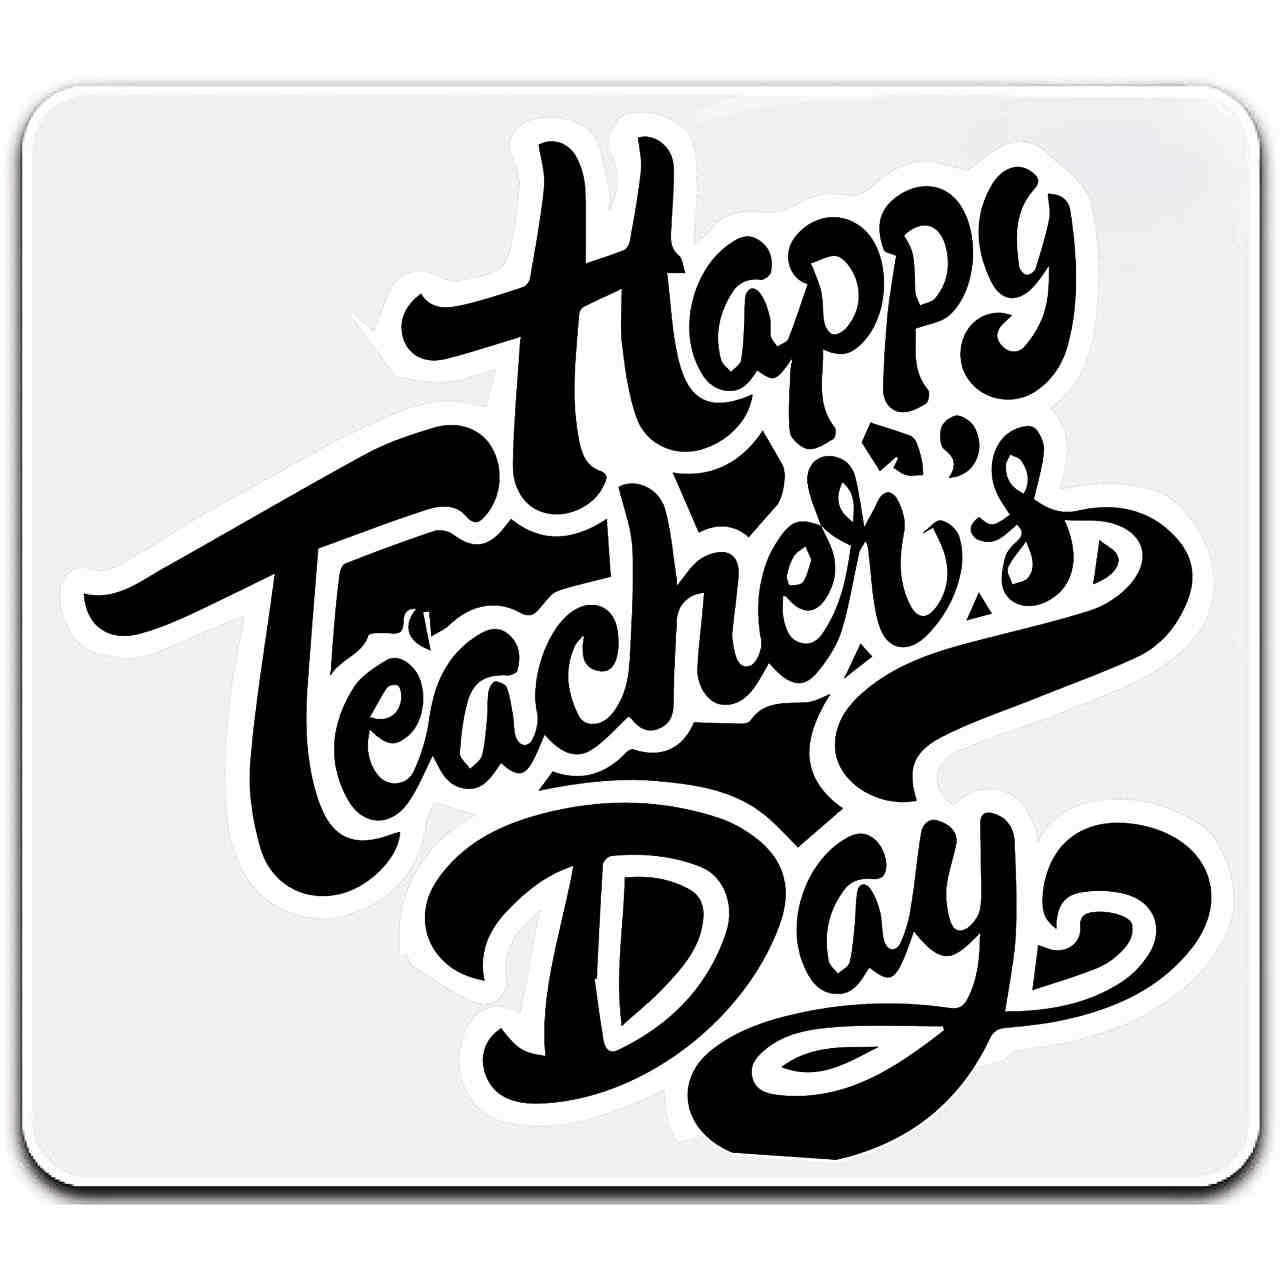 HAPPY TEACHERS DAY MOUSE PAD (Design 8)